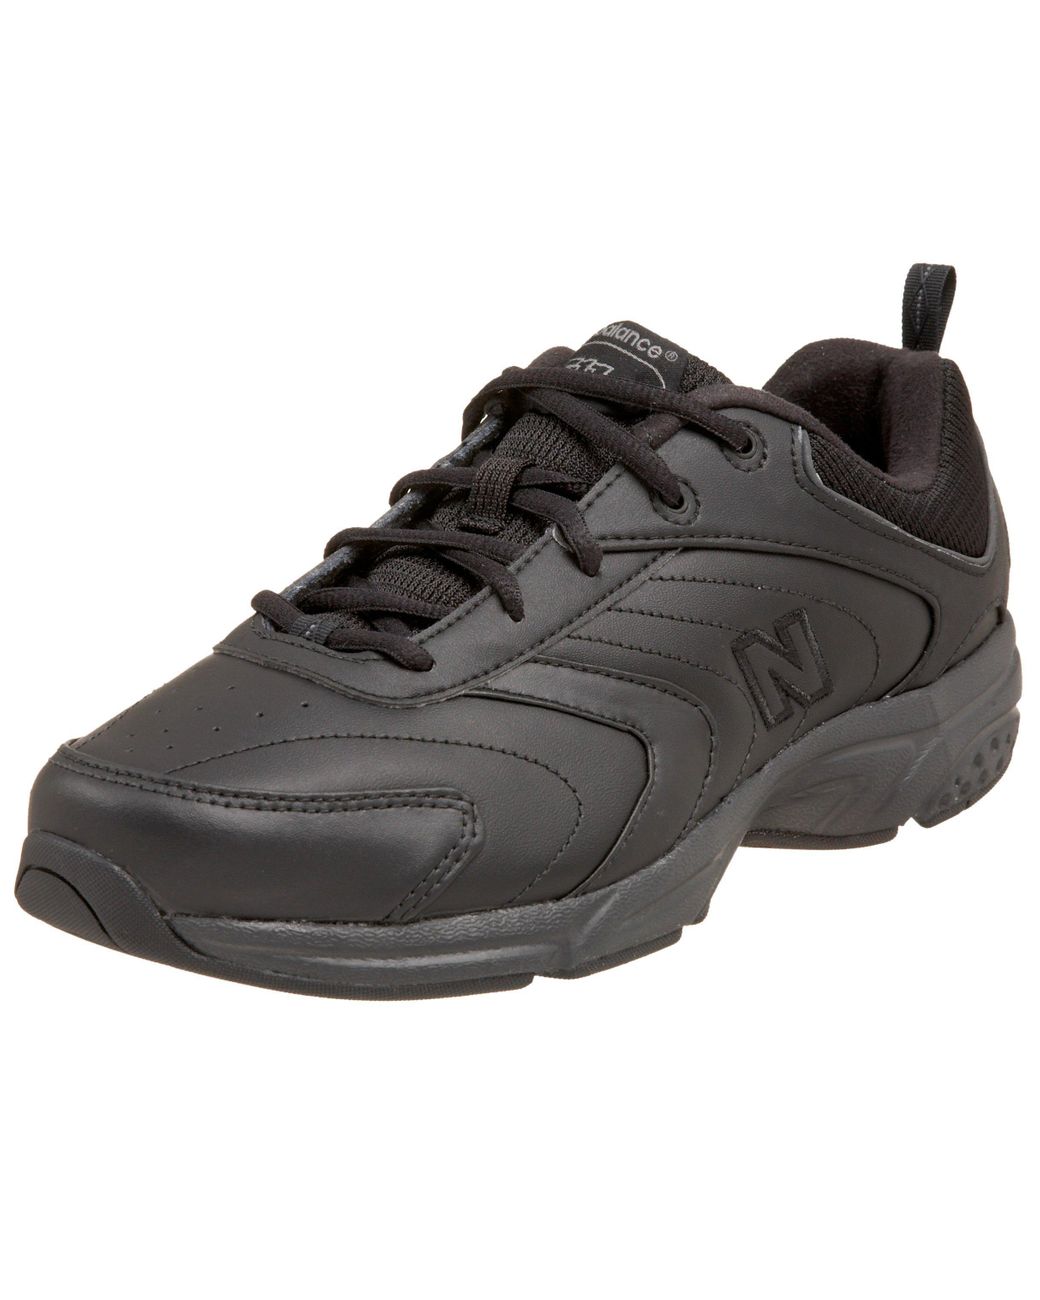 New Balance 511 V1 Walking Shoe in Black | Lyst